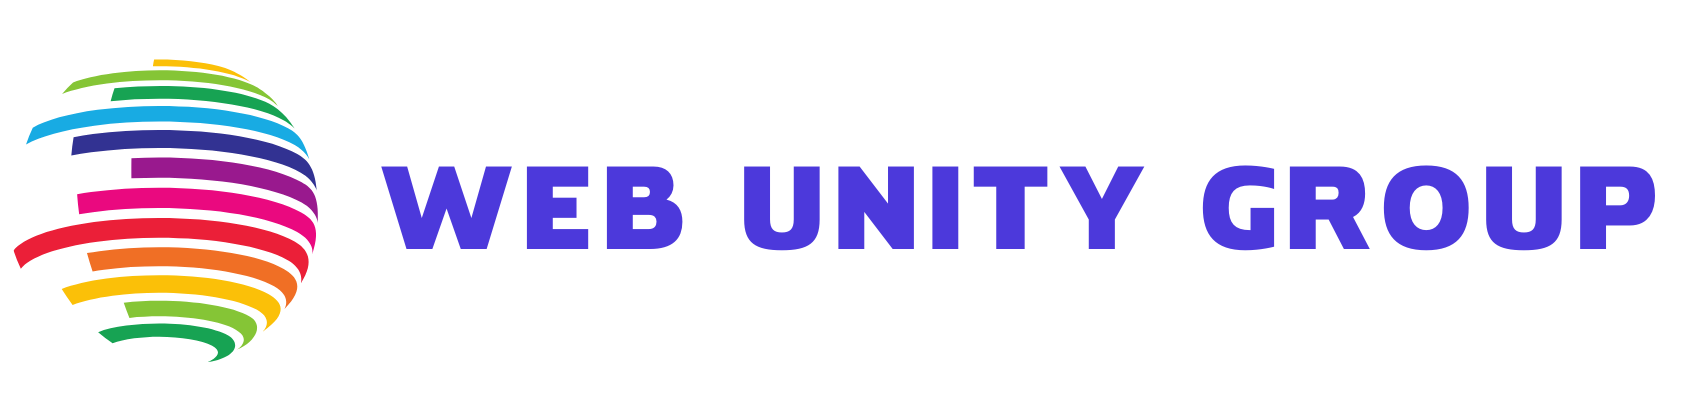 Web Unity Group Limited